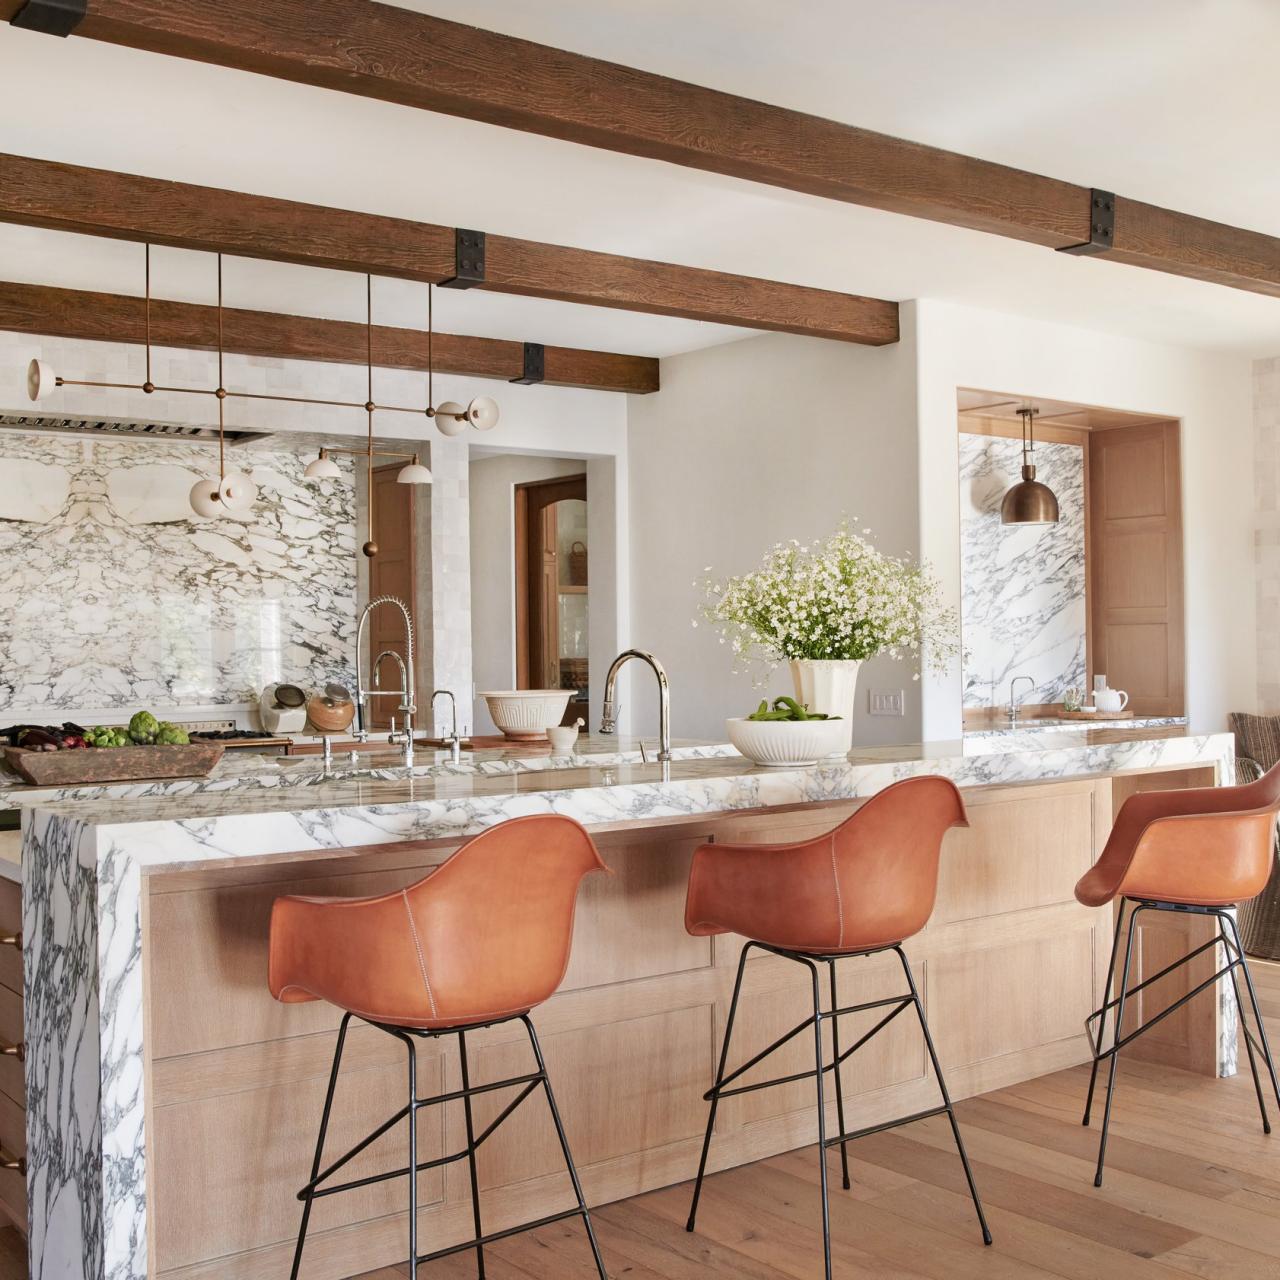 20 Beautiful Apartment Kitchen Decor Ideas That You'll Love